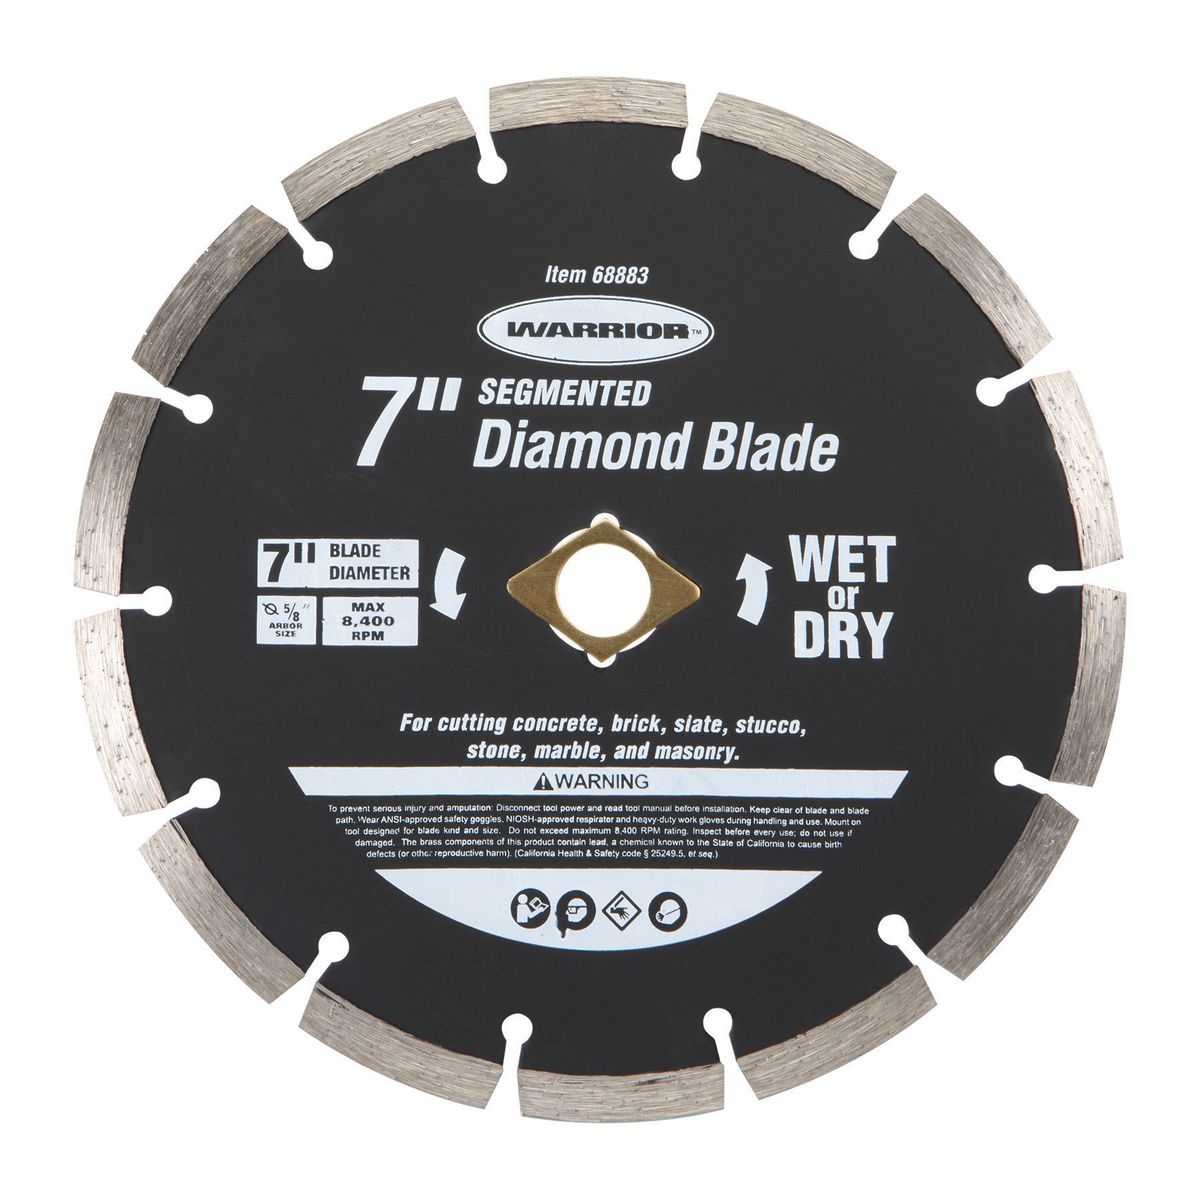 WARRIOR 7 in. Segmented Dry Cut Diamond Blade for Masonry - Item 68883